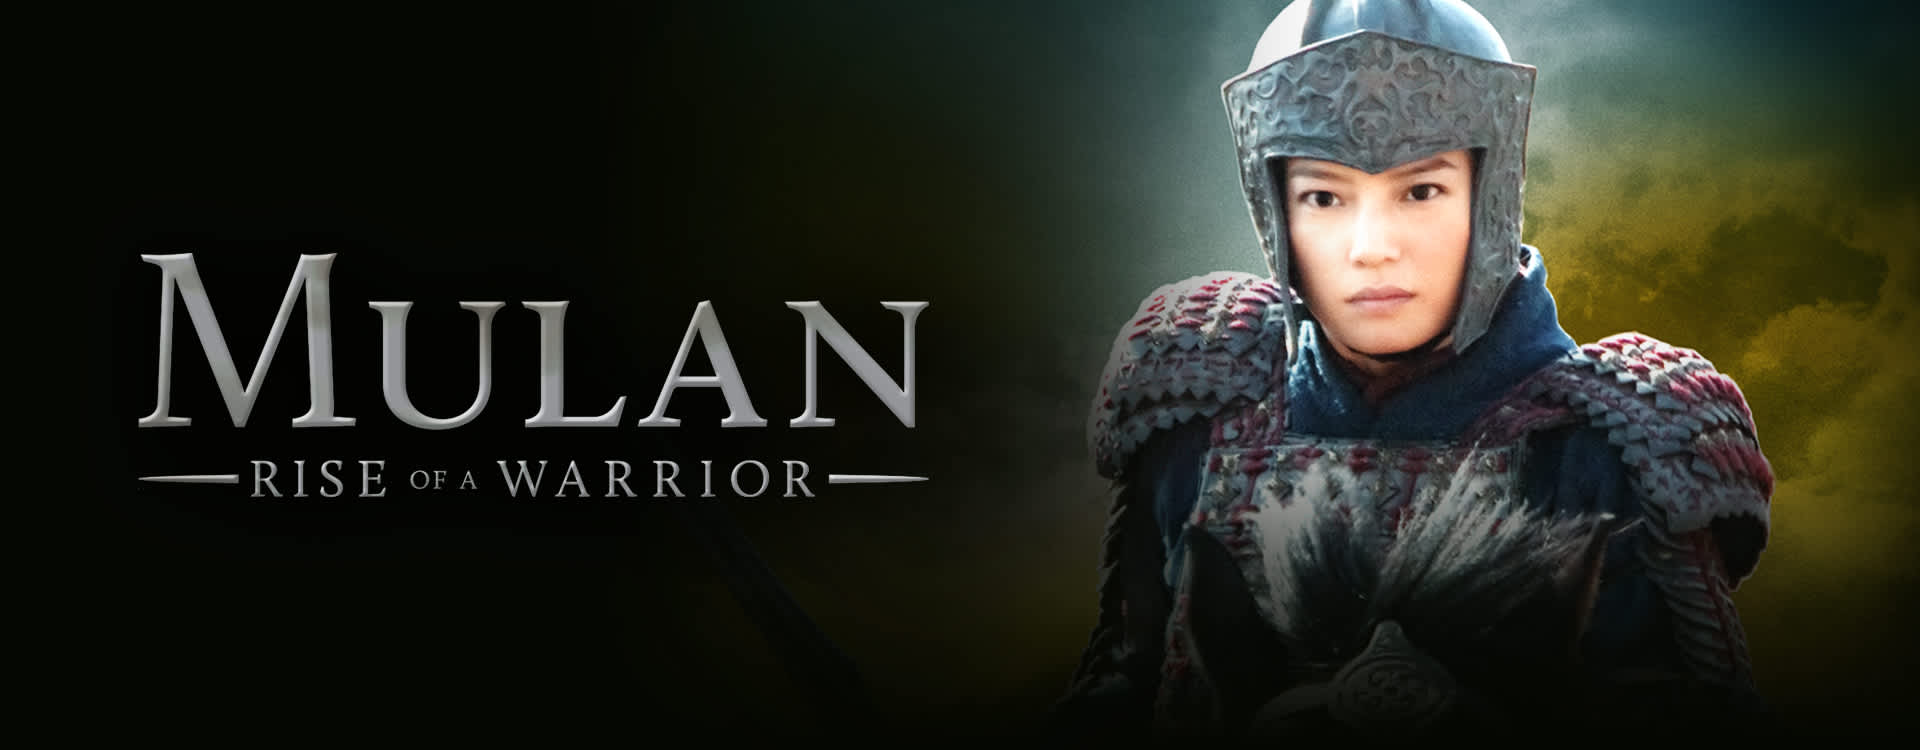 watch mulan rise of a warrior eng dub free